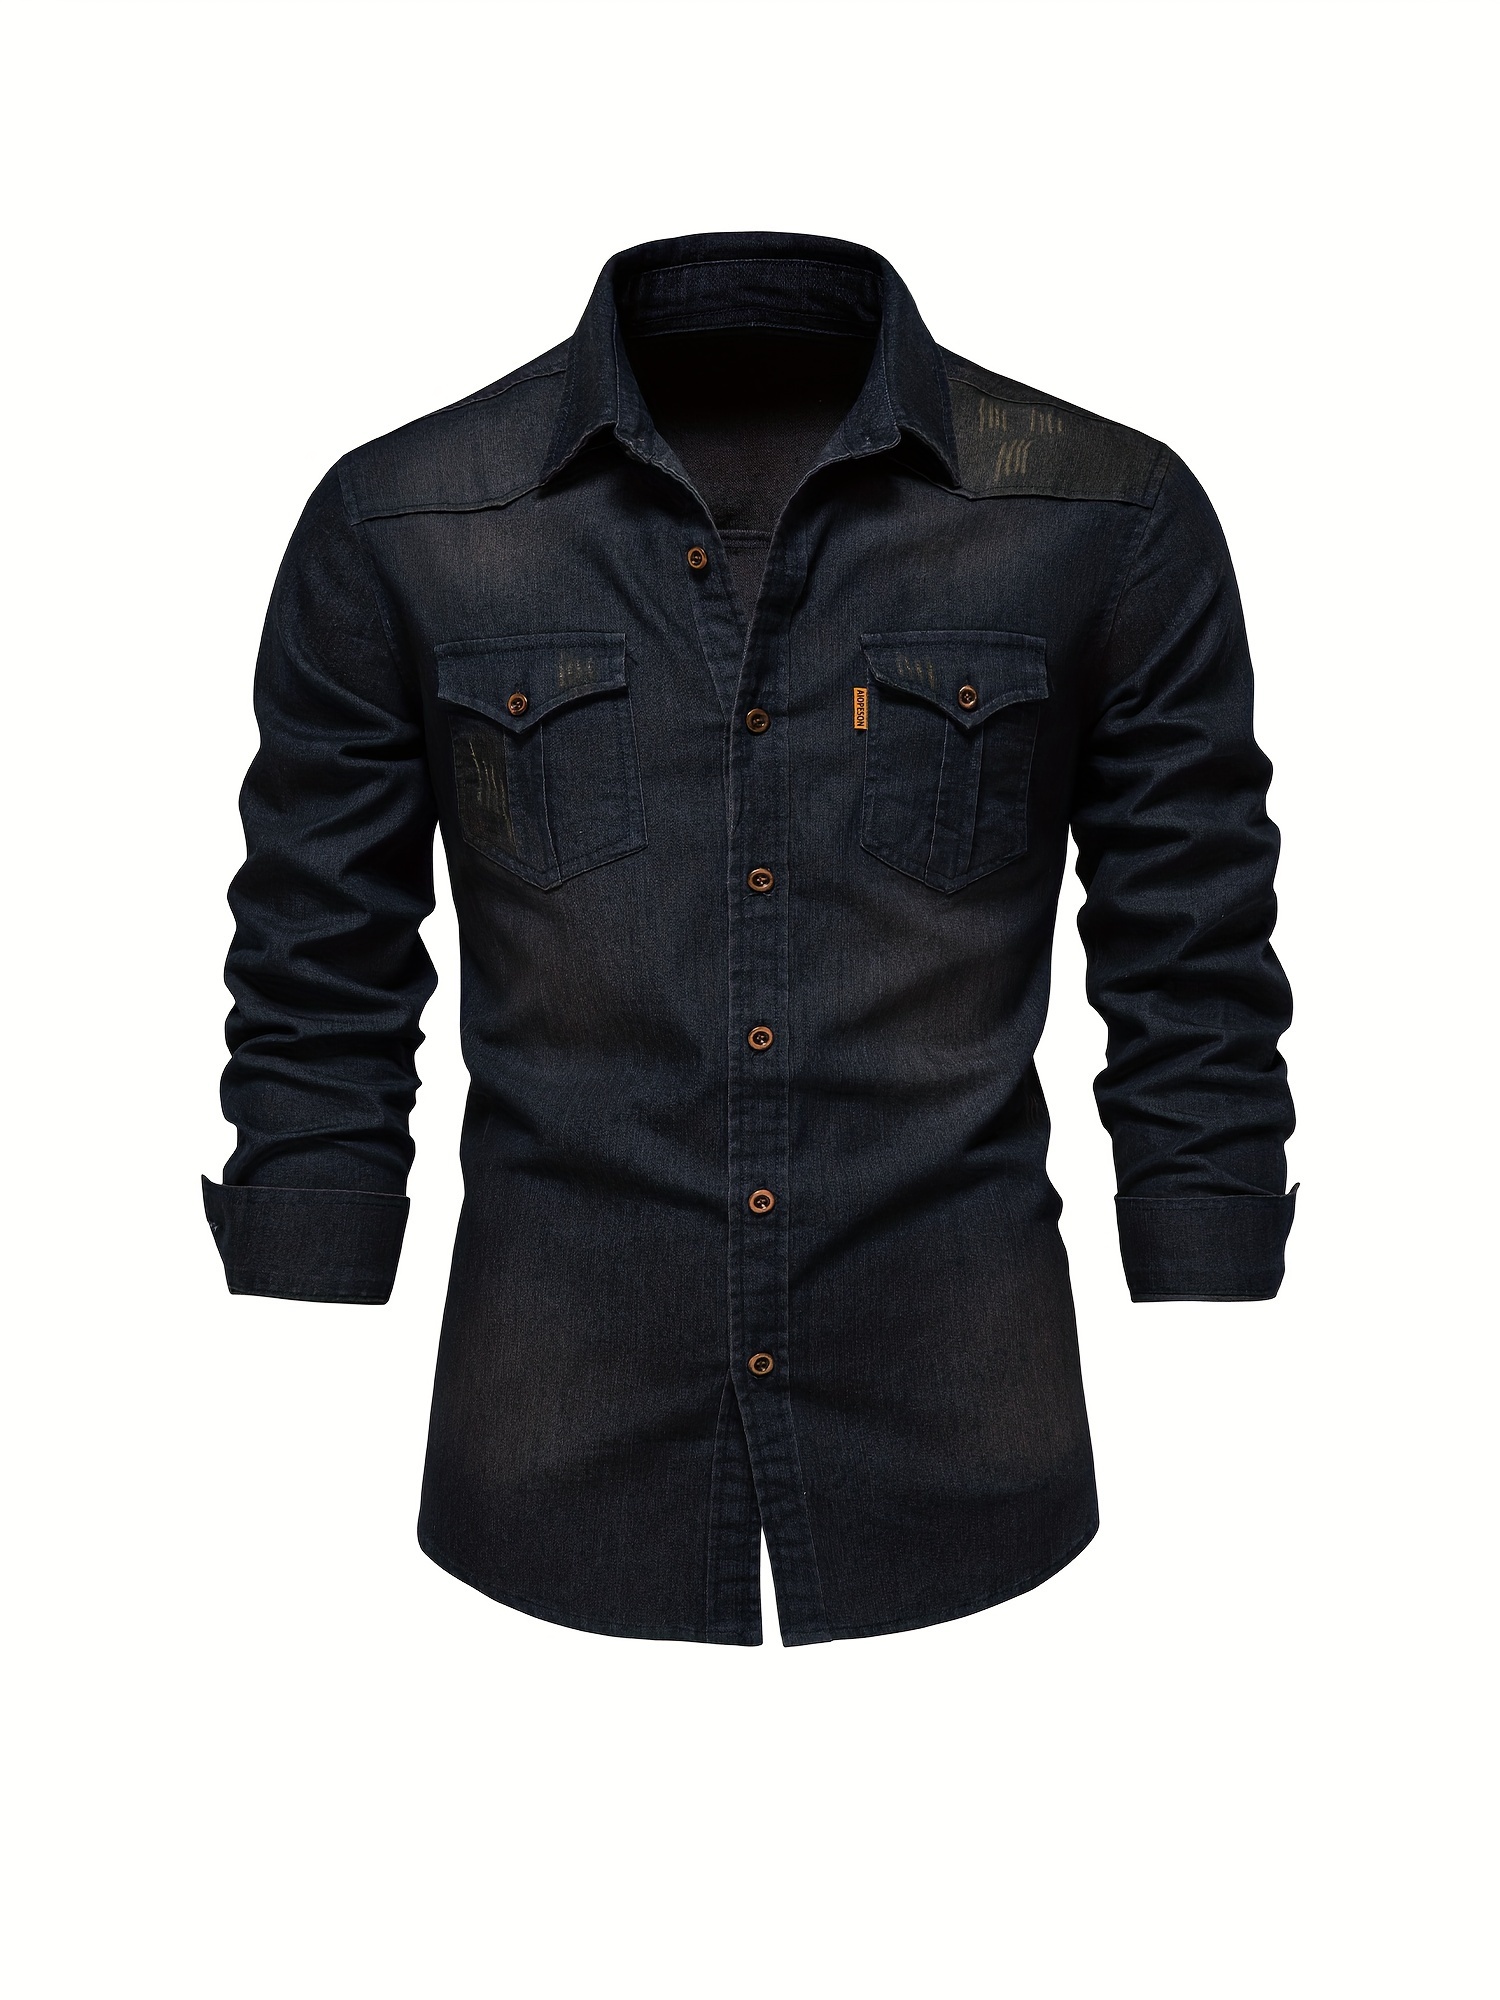 denim shirt with black jeans